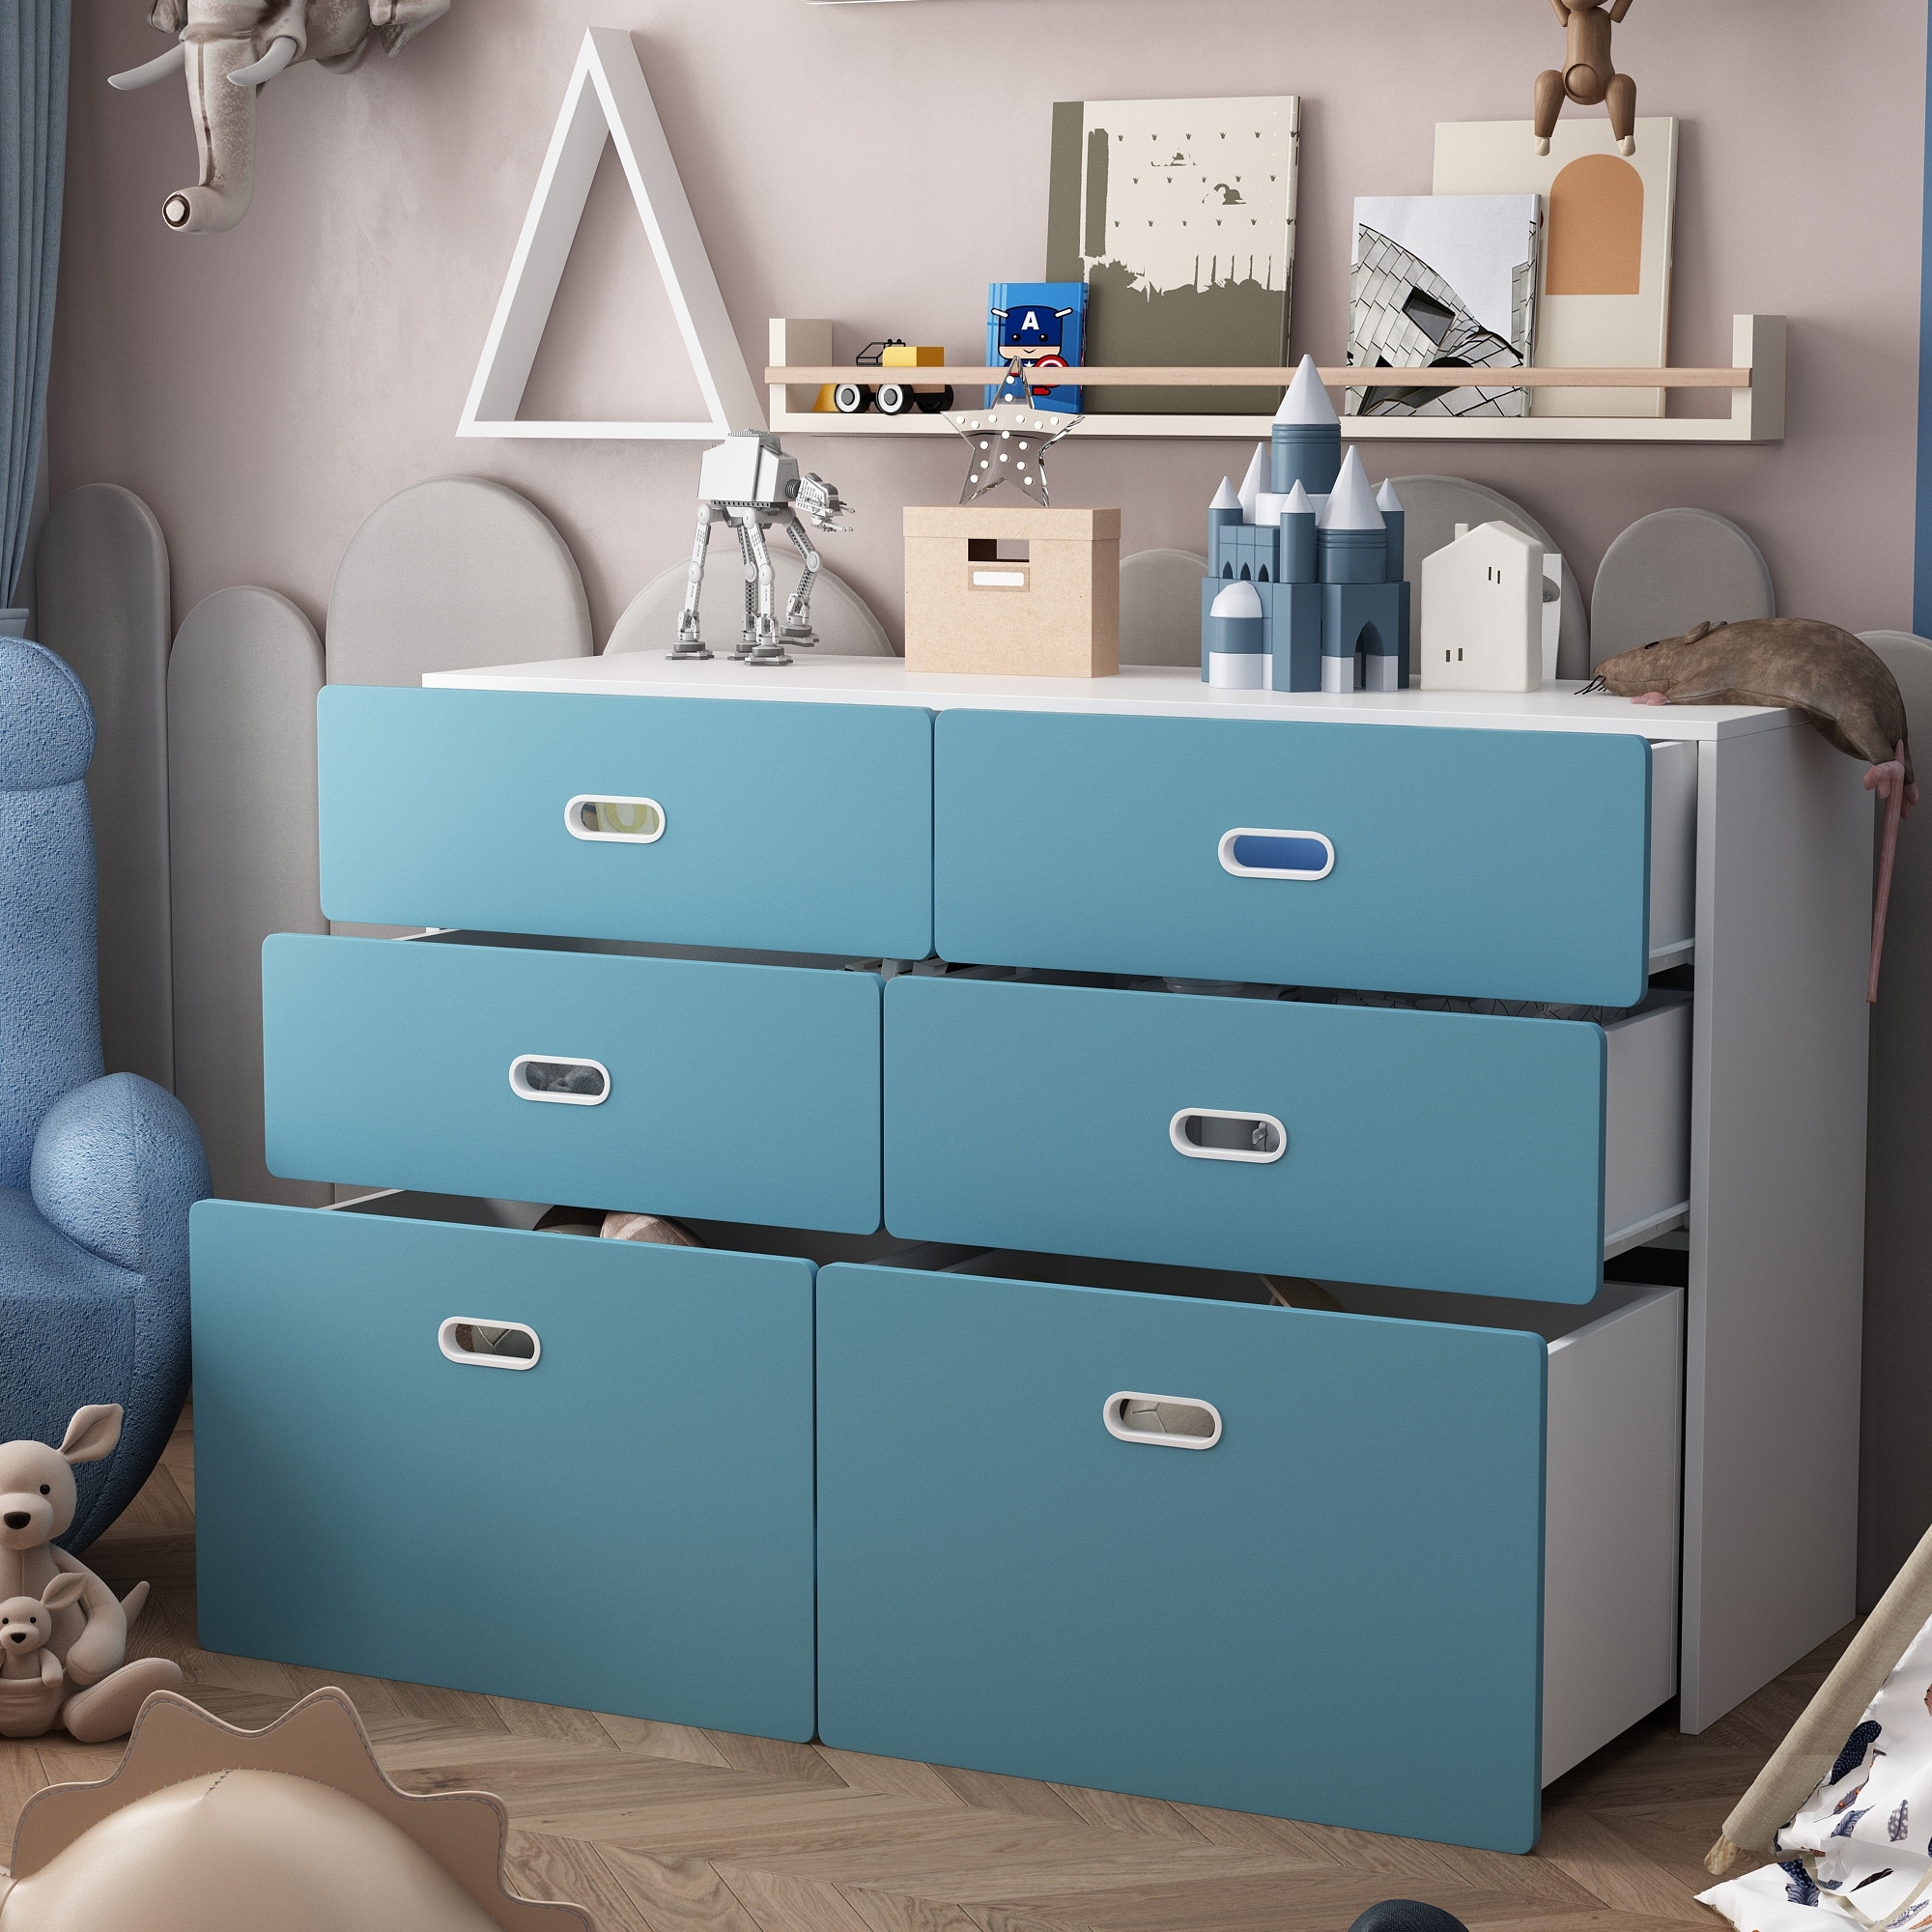 https://ak1.ostkcdn.com/images/products/is/images/direct/54a28f95757e97e92613bc99e2dcffc8d5ad5c0c/6Drawer-Dresser-Blue-Dresser-Nursery-Dresser-Storage-Organizer-Cabinet.jpg